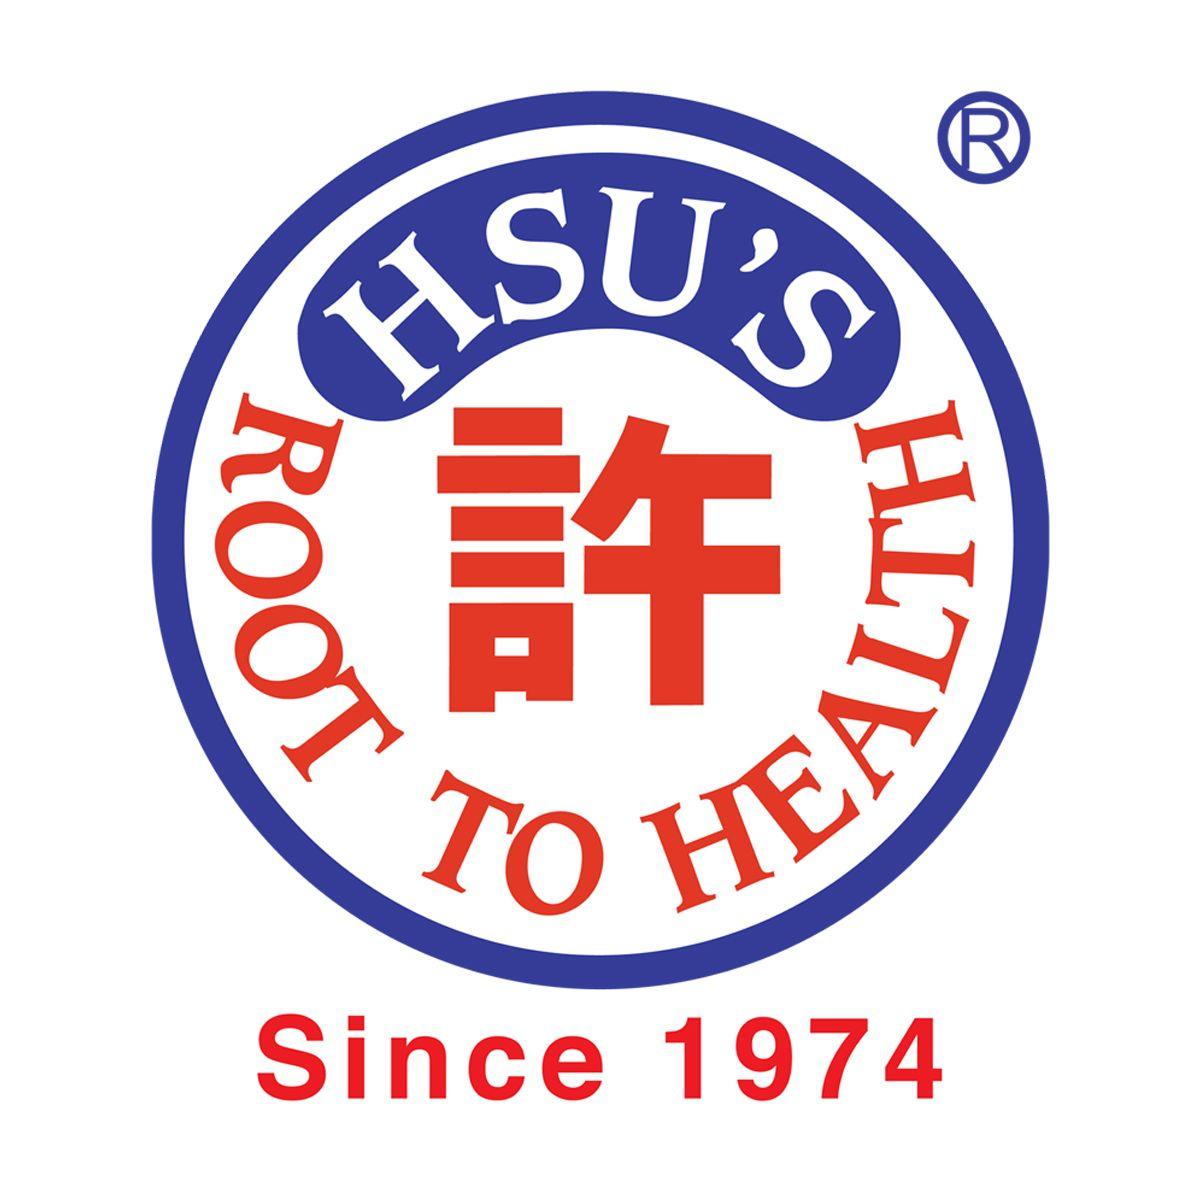 Hsu Logo - HSU Ginseng Logo - Mission Possible Parent & Faculty Association